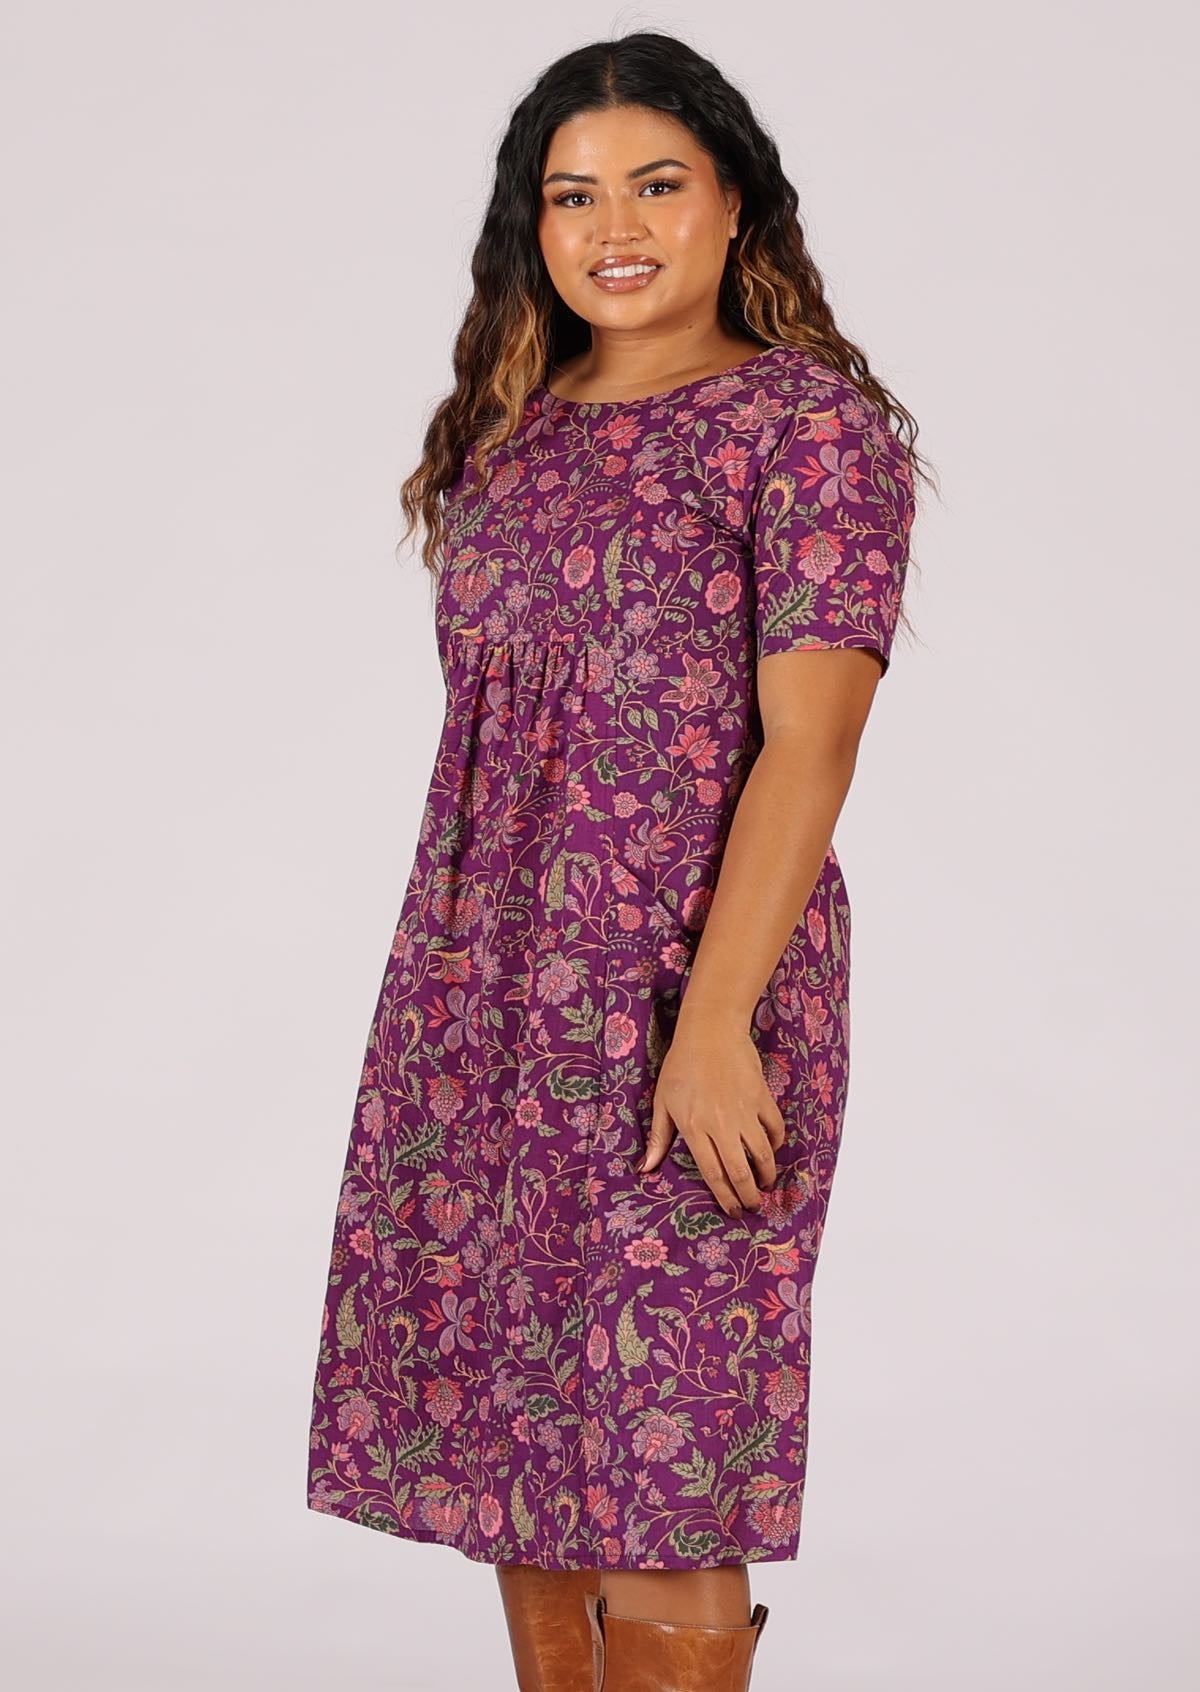 Floral print on purple base 100% cotton short sleeve dress